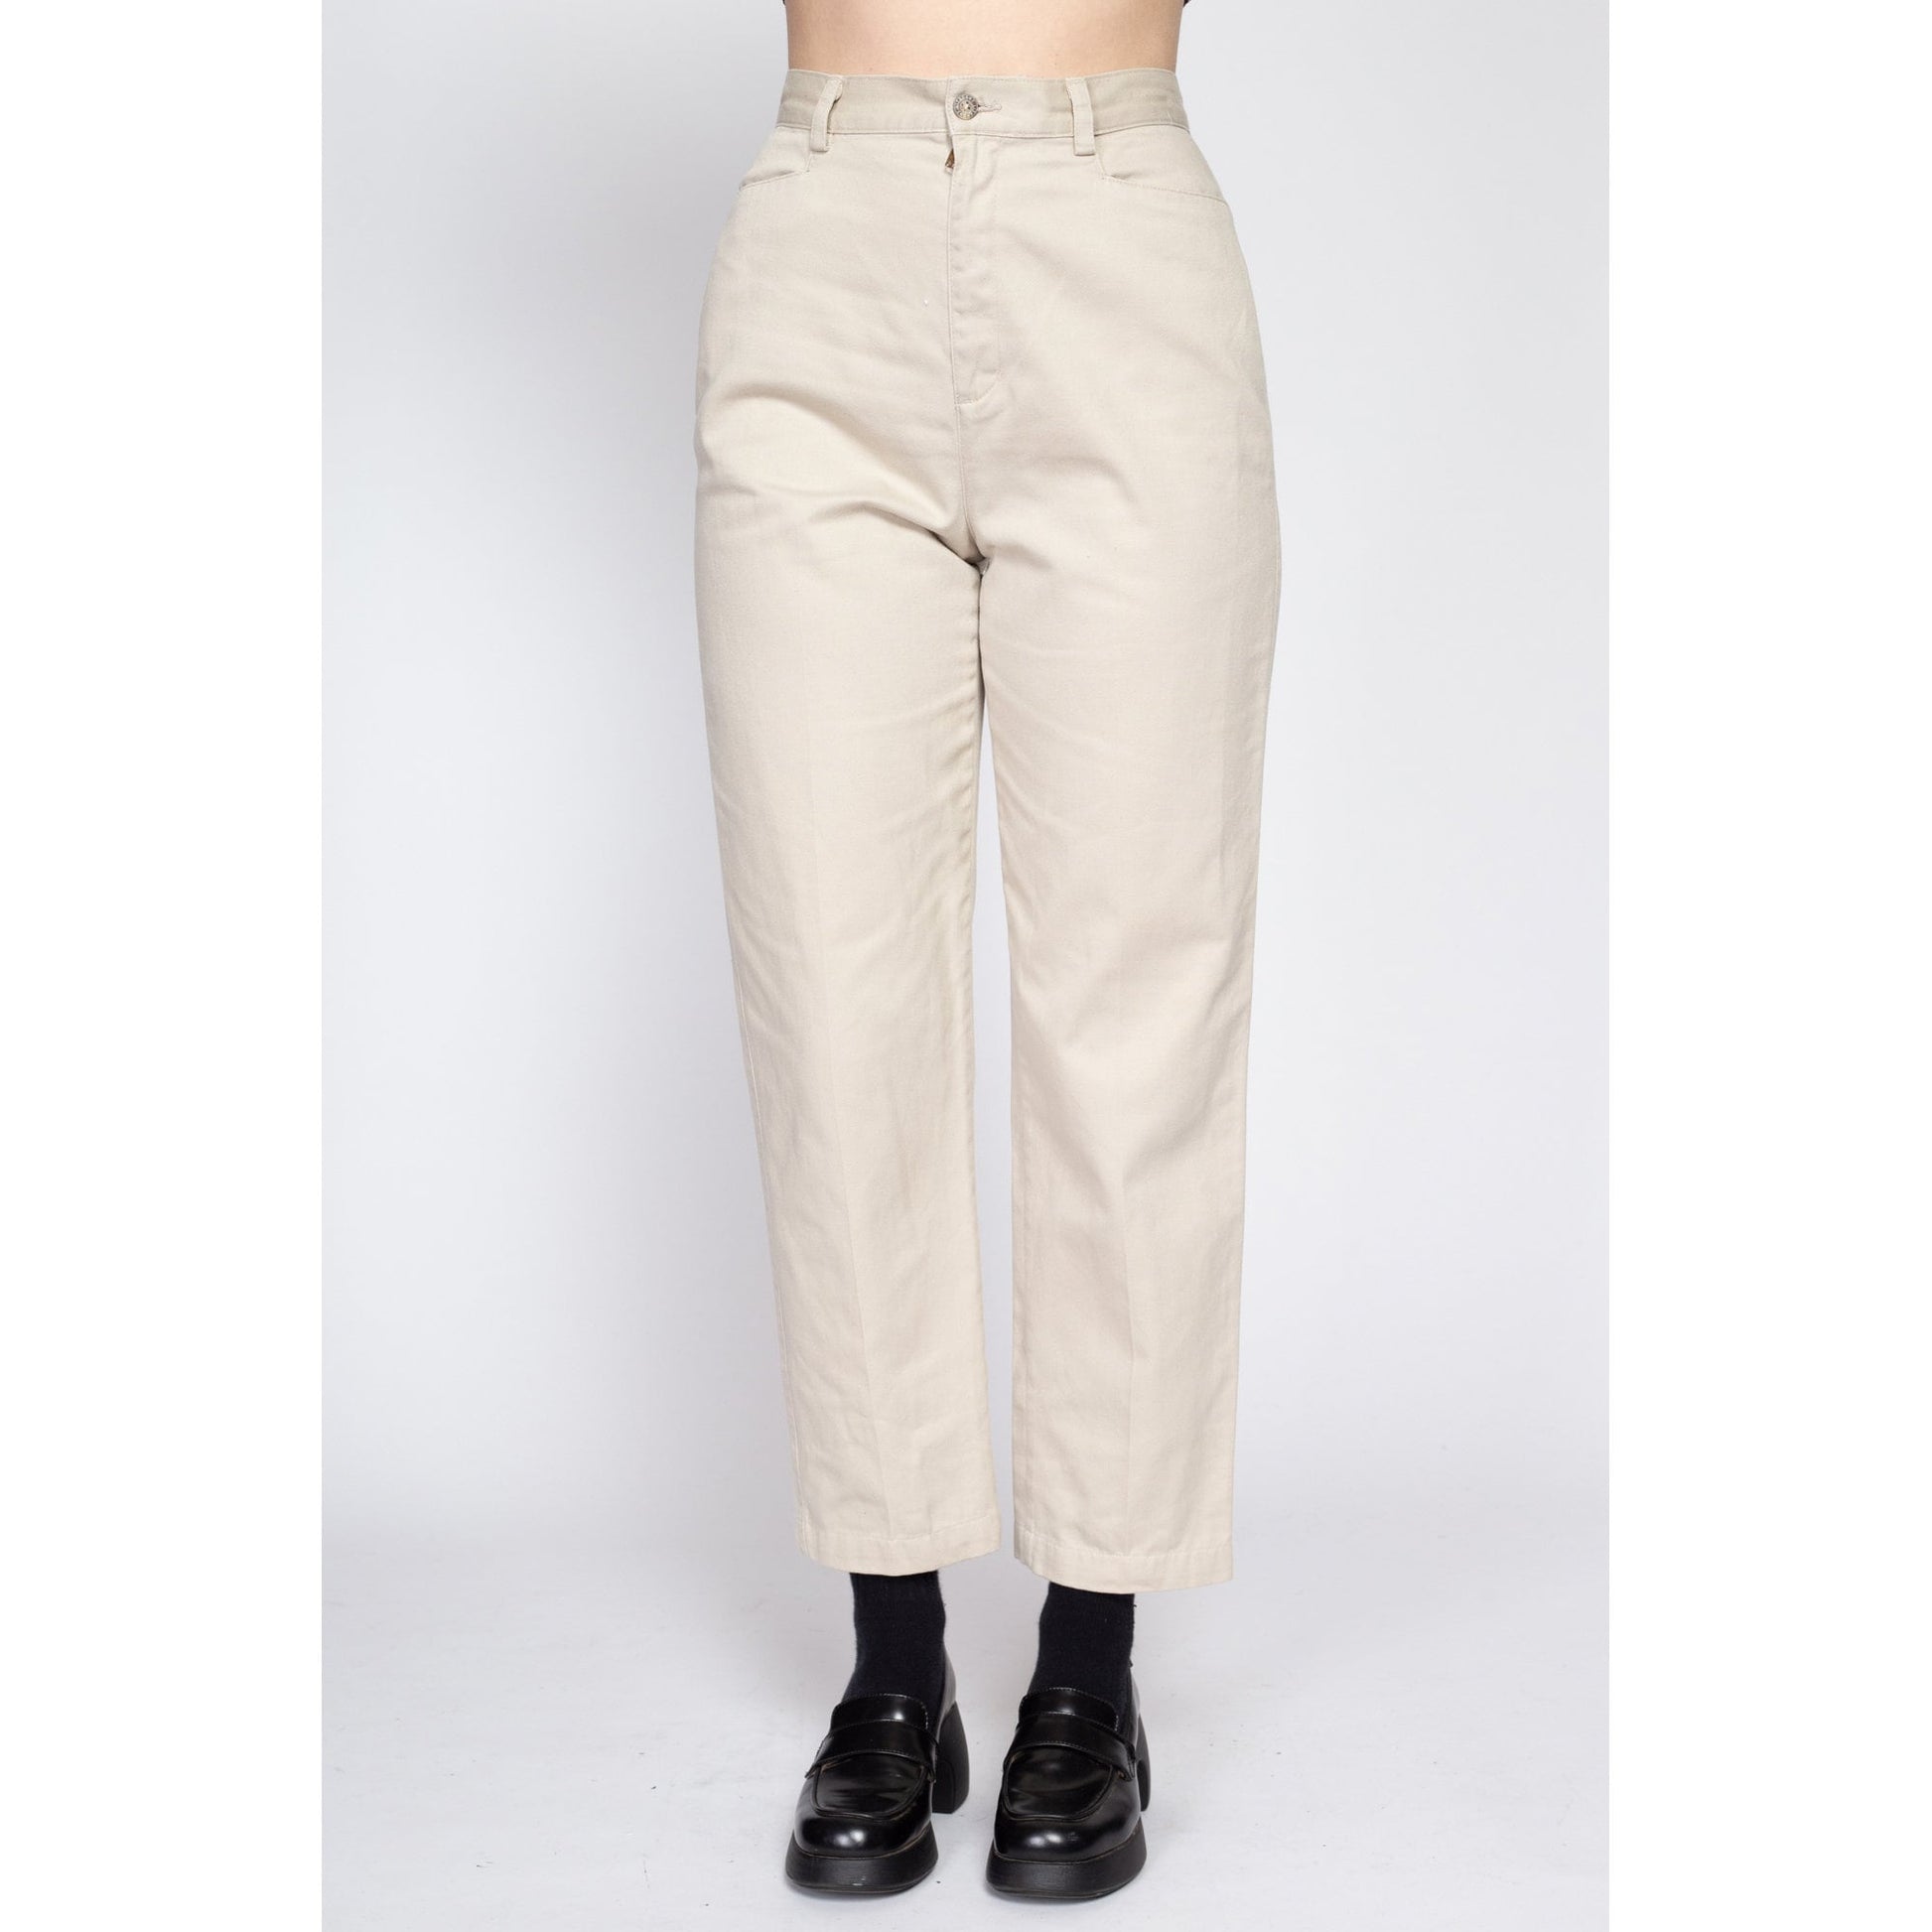 Small 90s Liz Claiborne Cotton Khaki High Waisted Pants 26.5